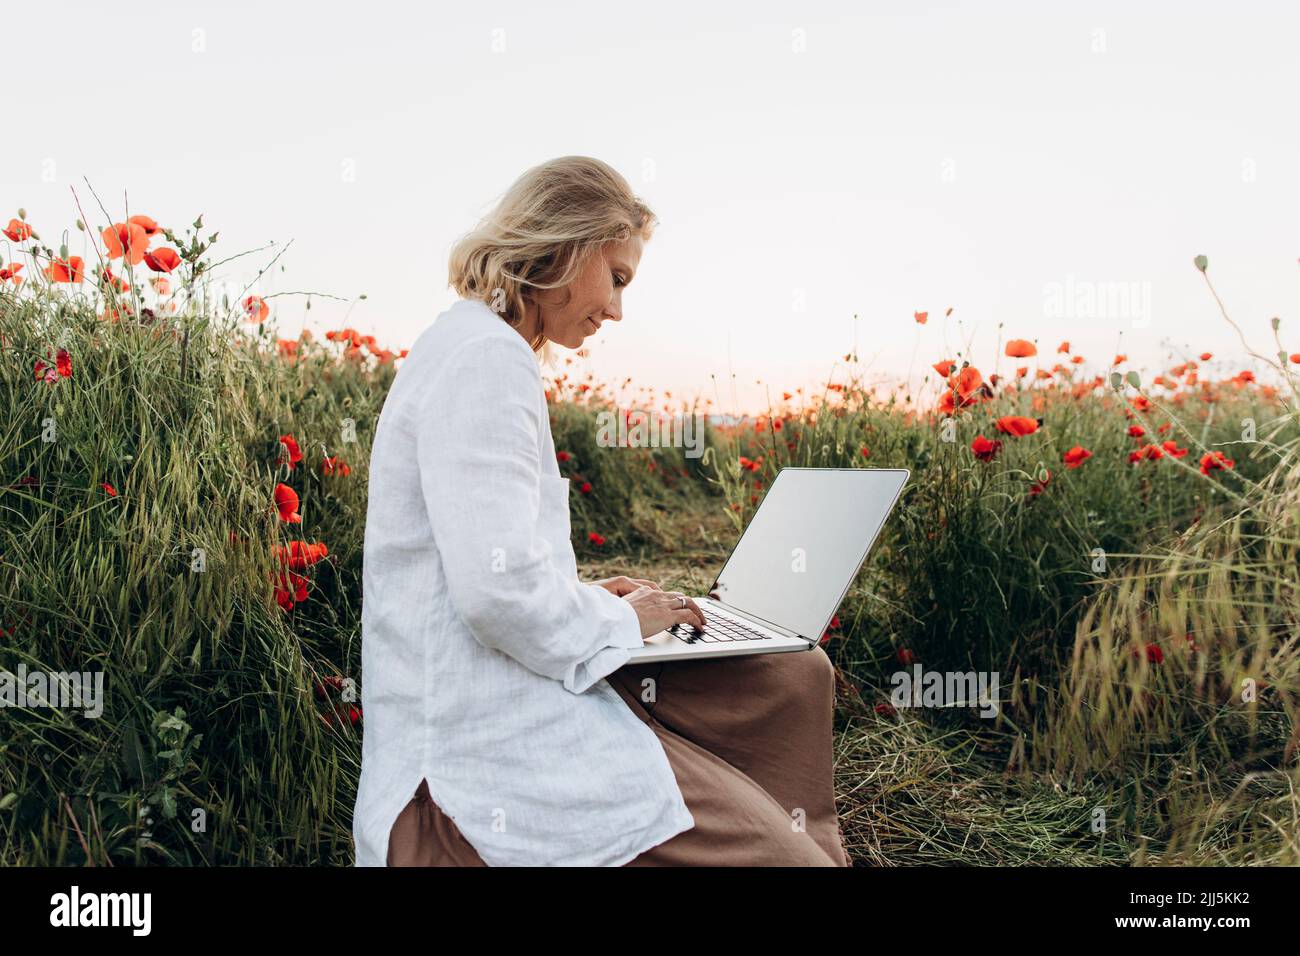 Smiling woman using laptop in poppy field Stock Photo